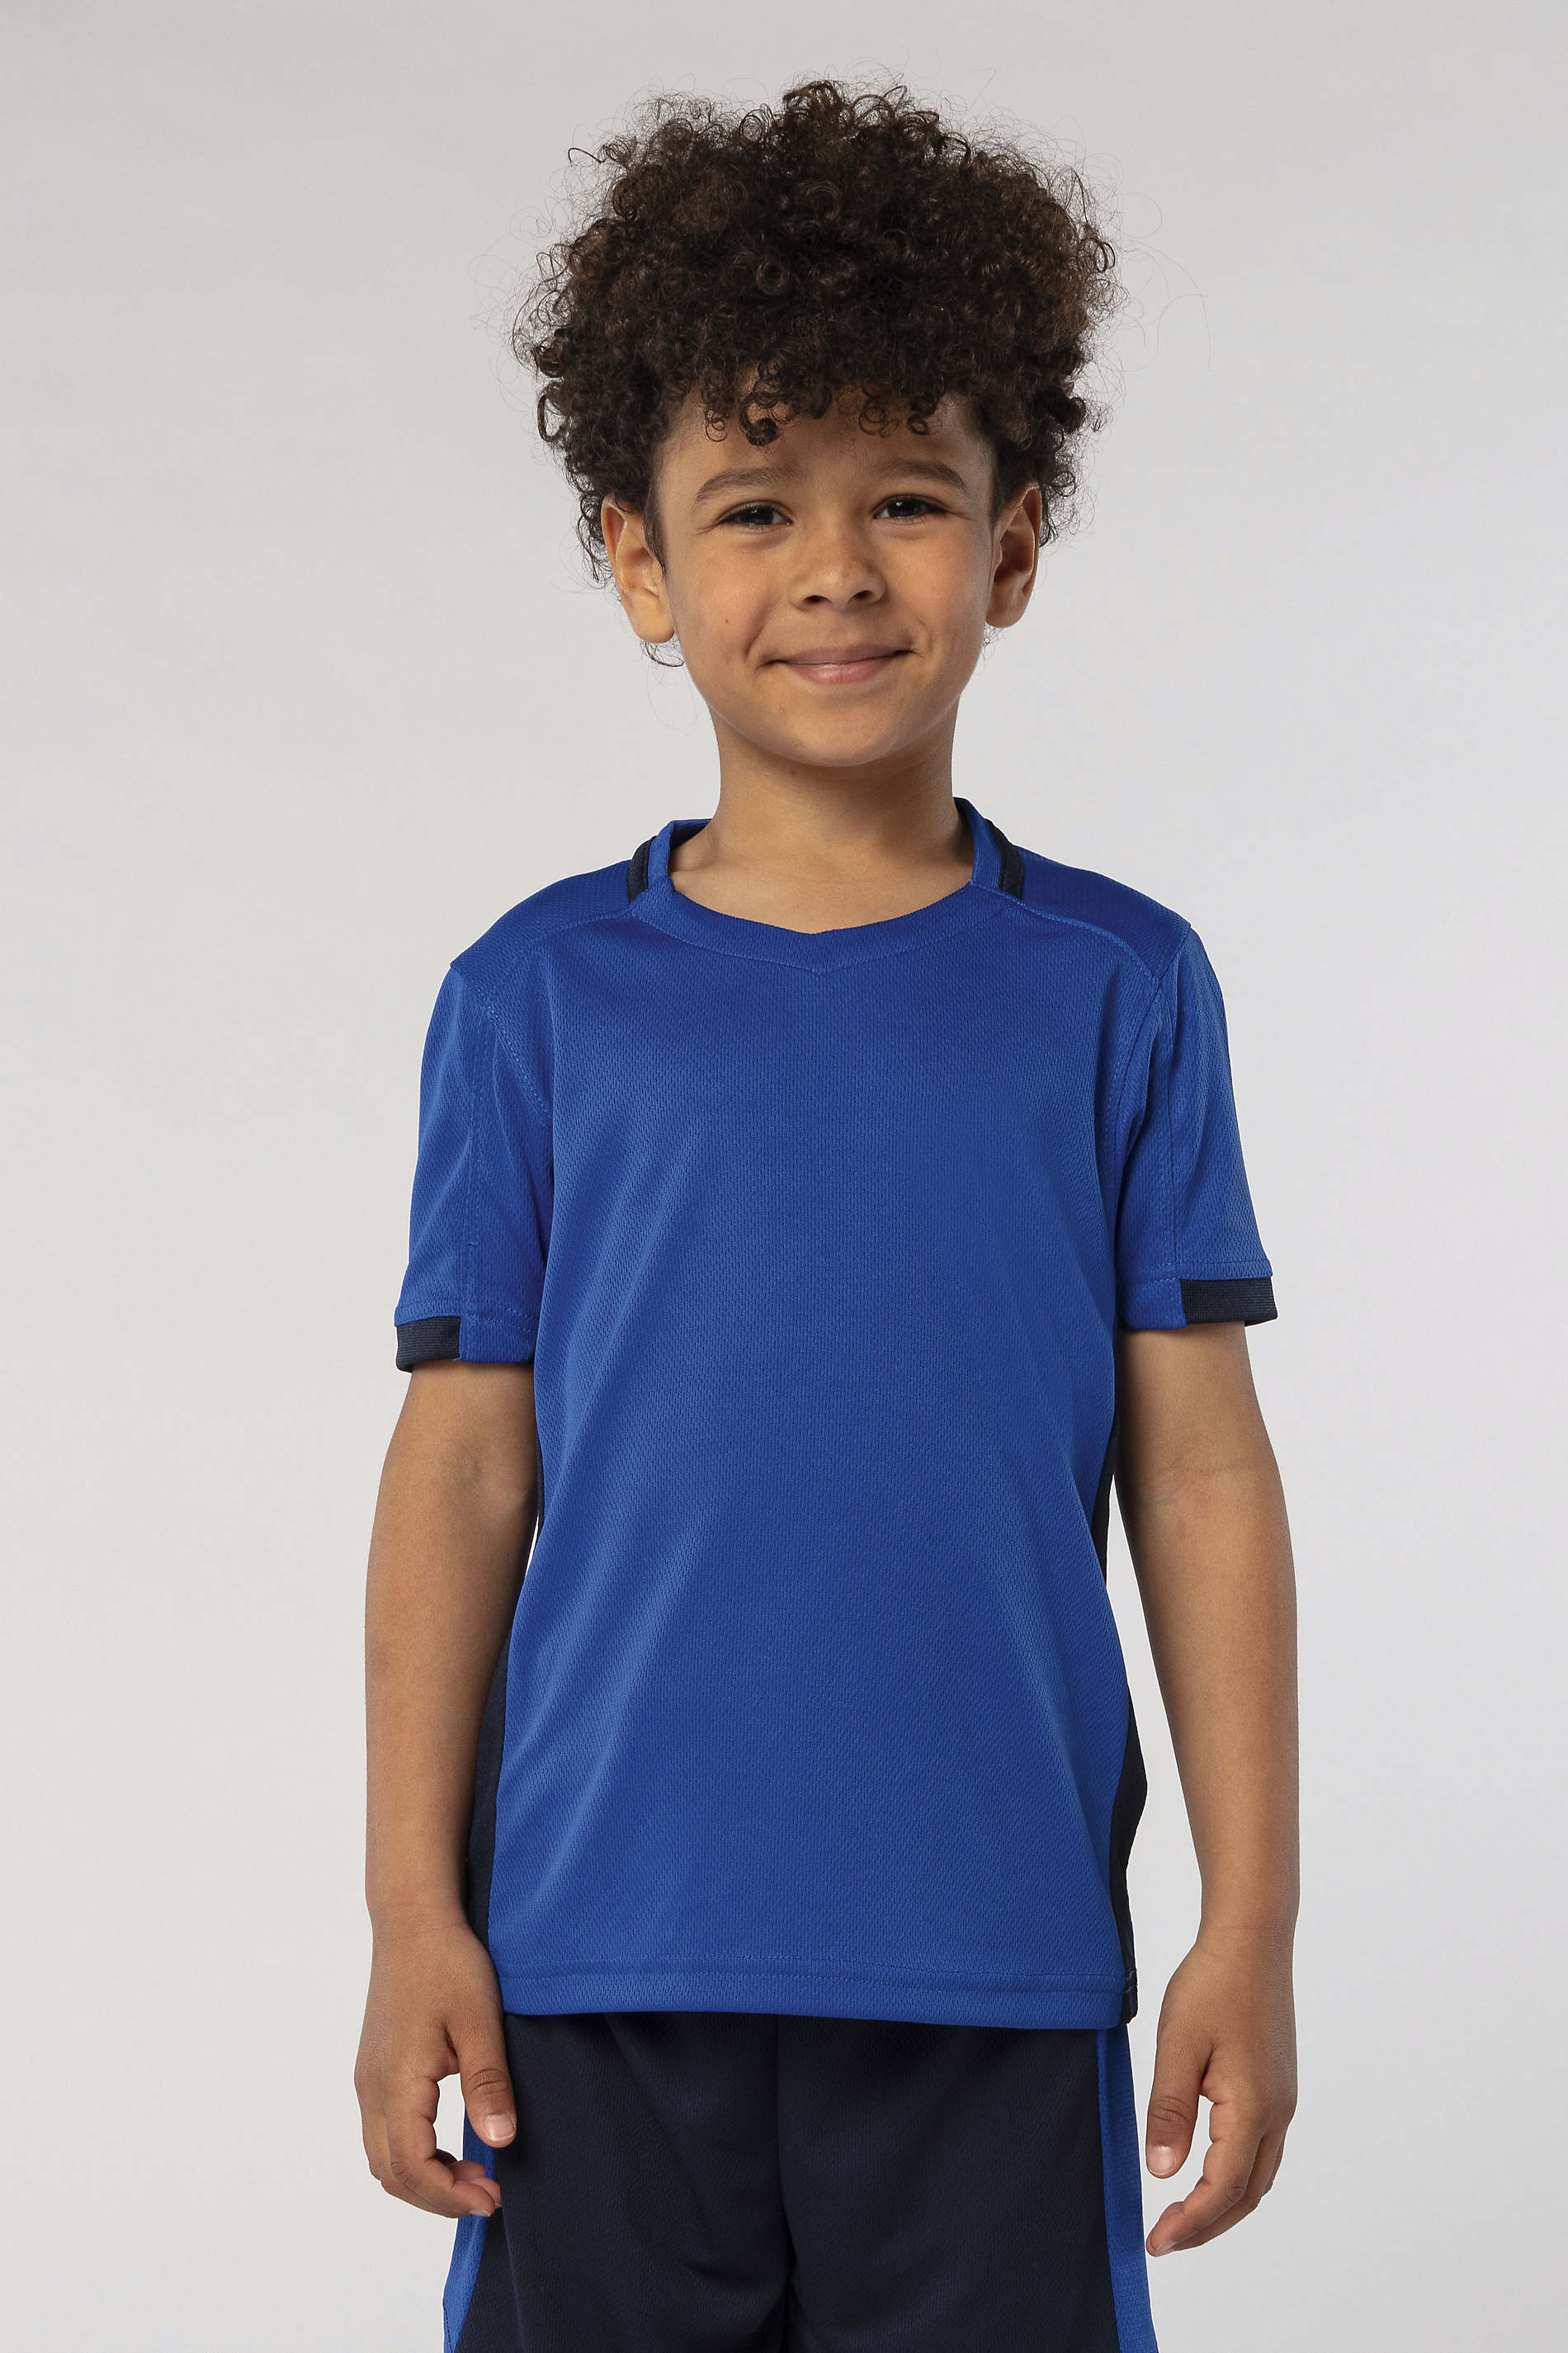 Sol's children's Sport T-Shirt Top Couleurs Fluo Garçons Filles Respirant été PE